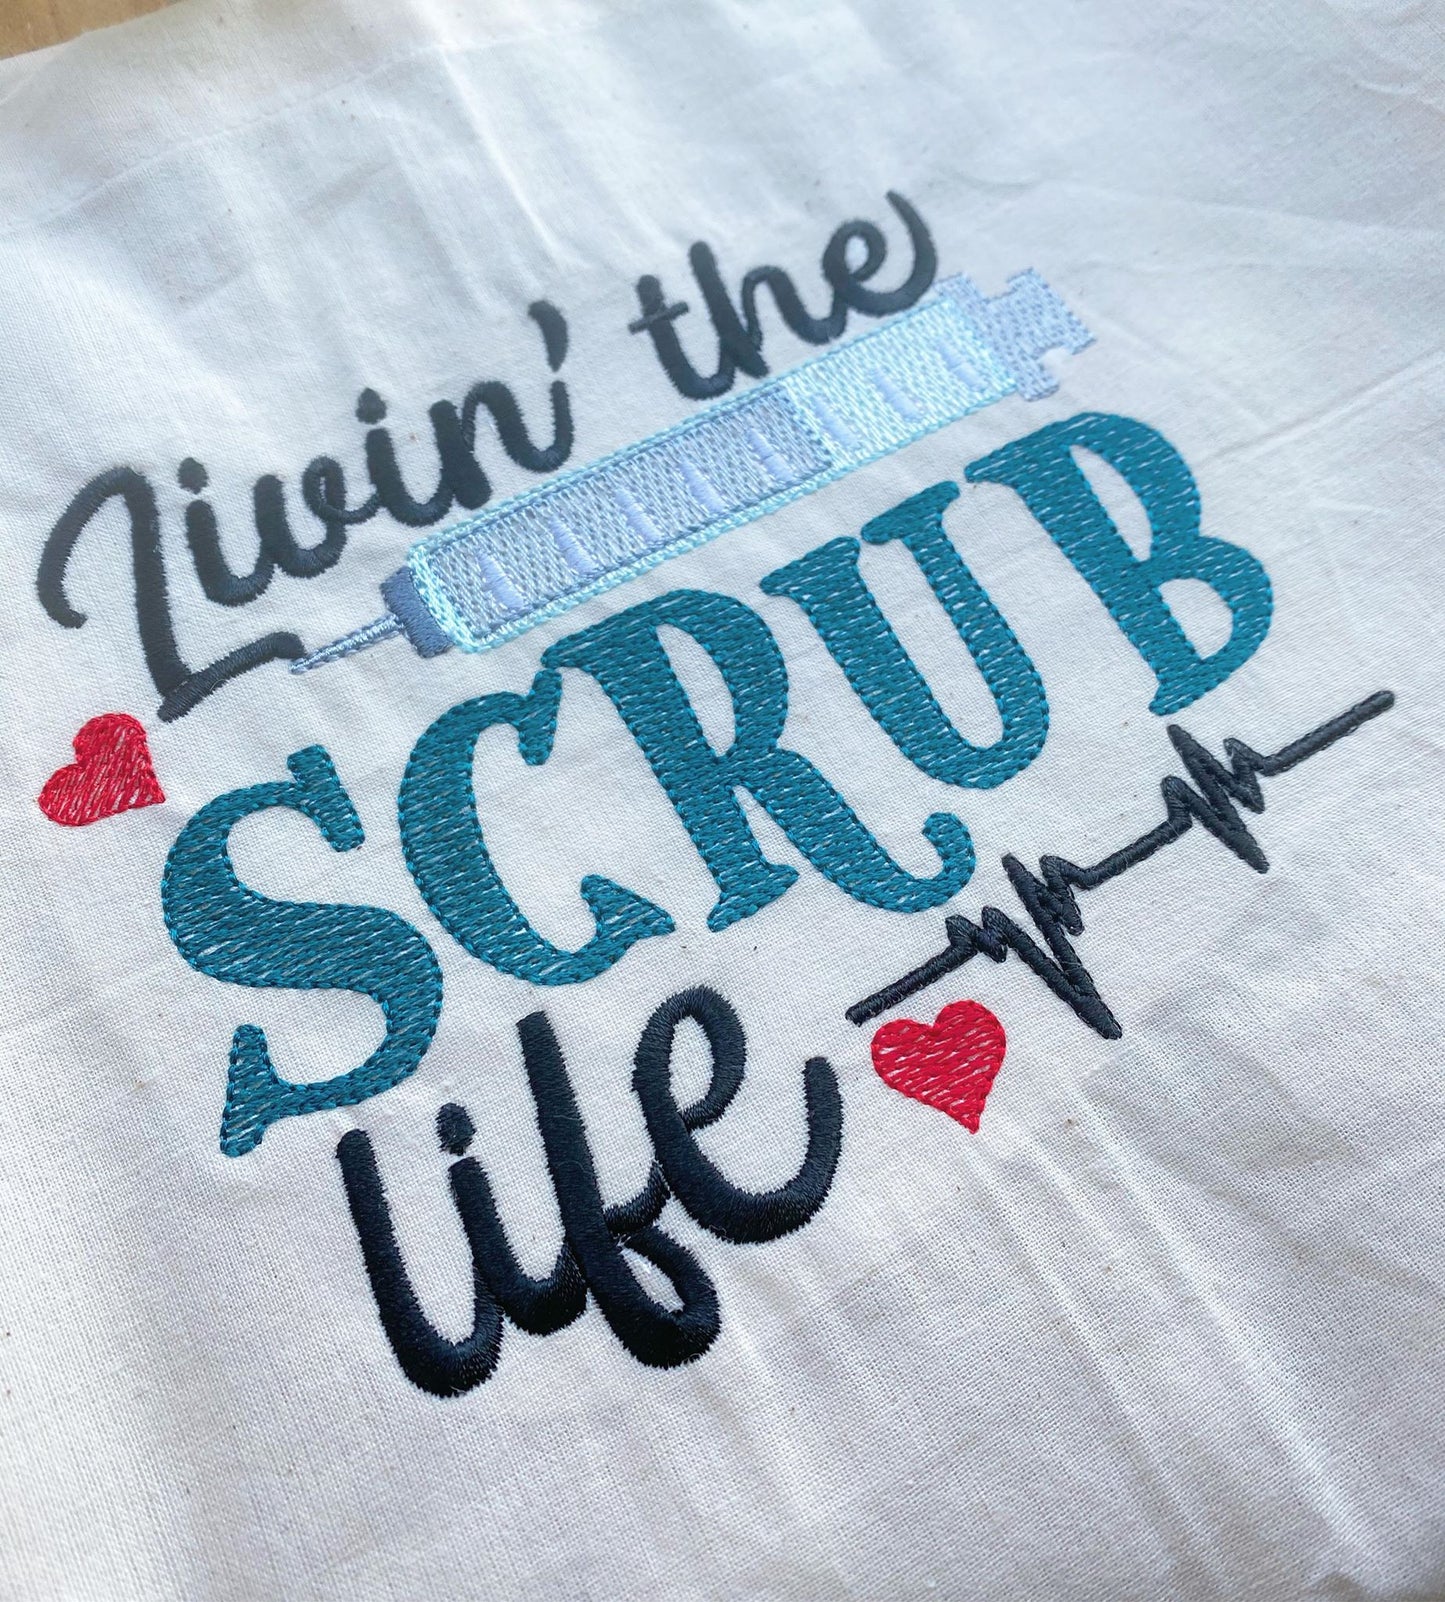 Livin' The Scrub Life - 2 Sizes - Digital Embroidery Design